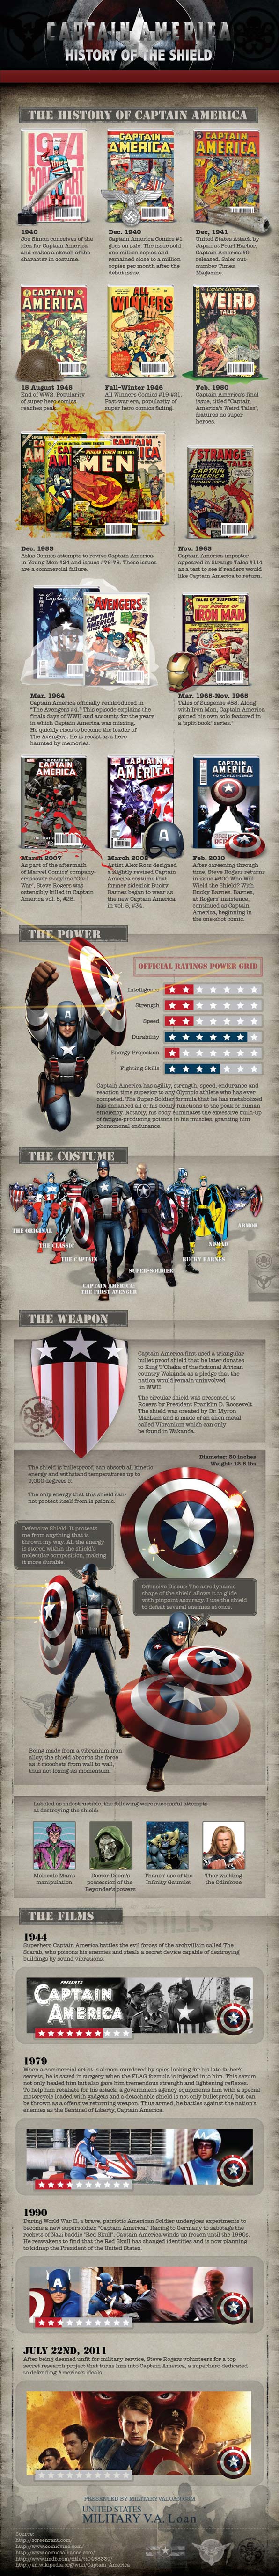 Captain America Infographic